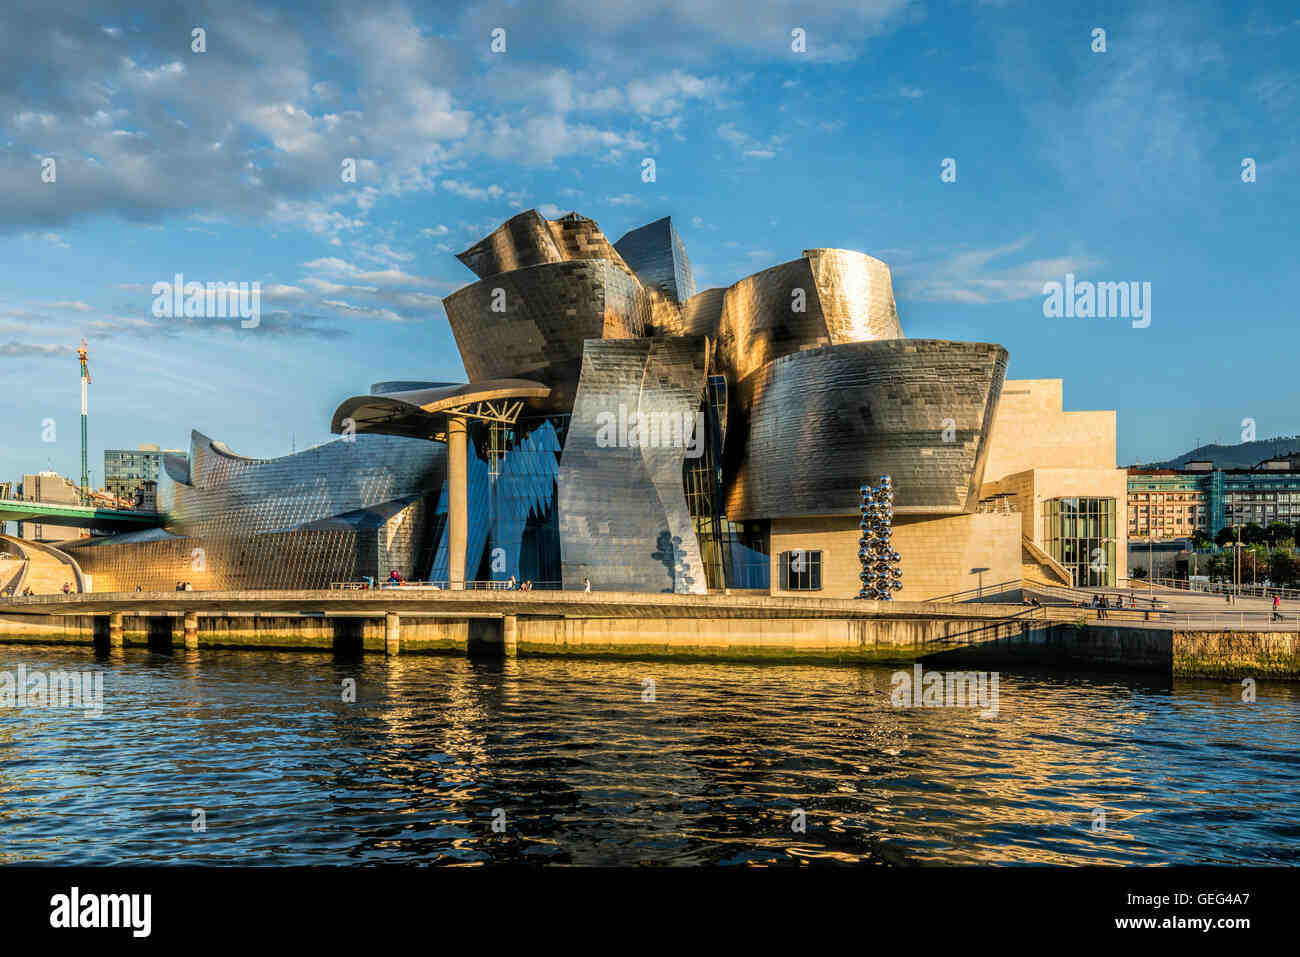 Qui a conçu le musée Guggenheim de New York ?